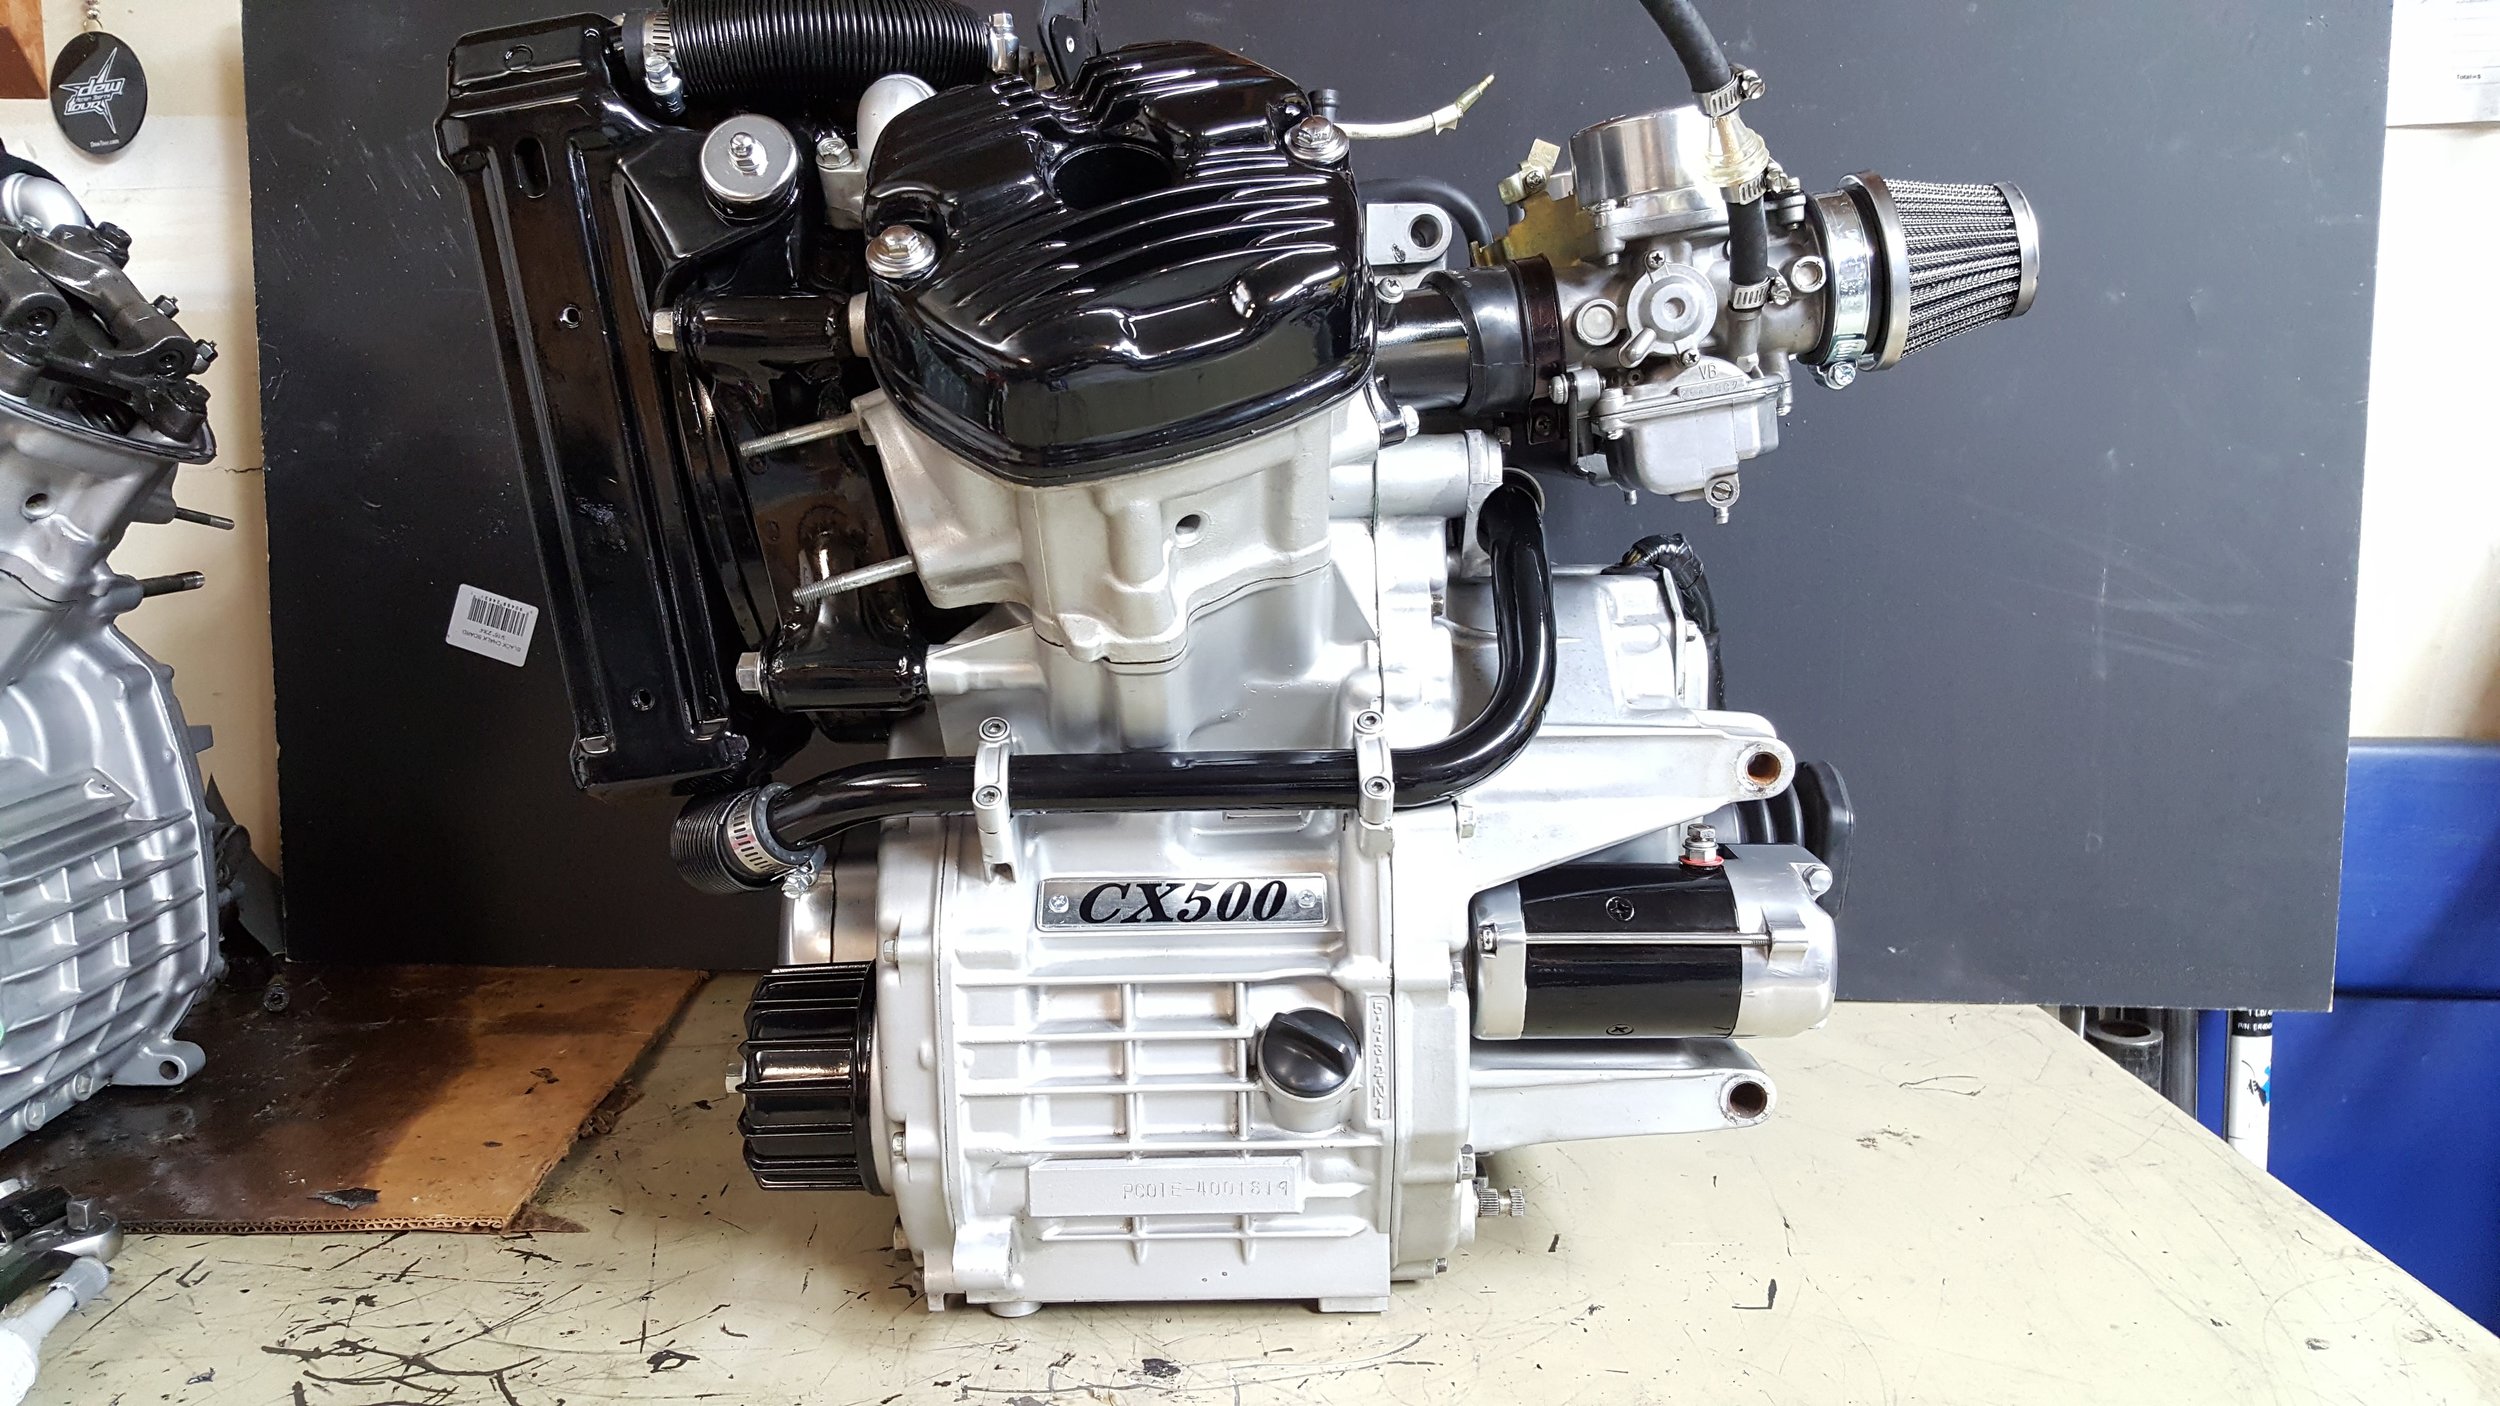 Honda cx500 engine build lake motorcycle 